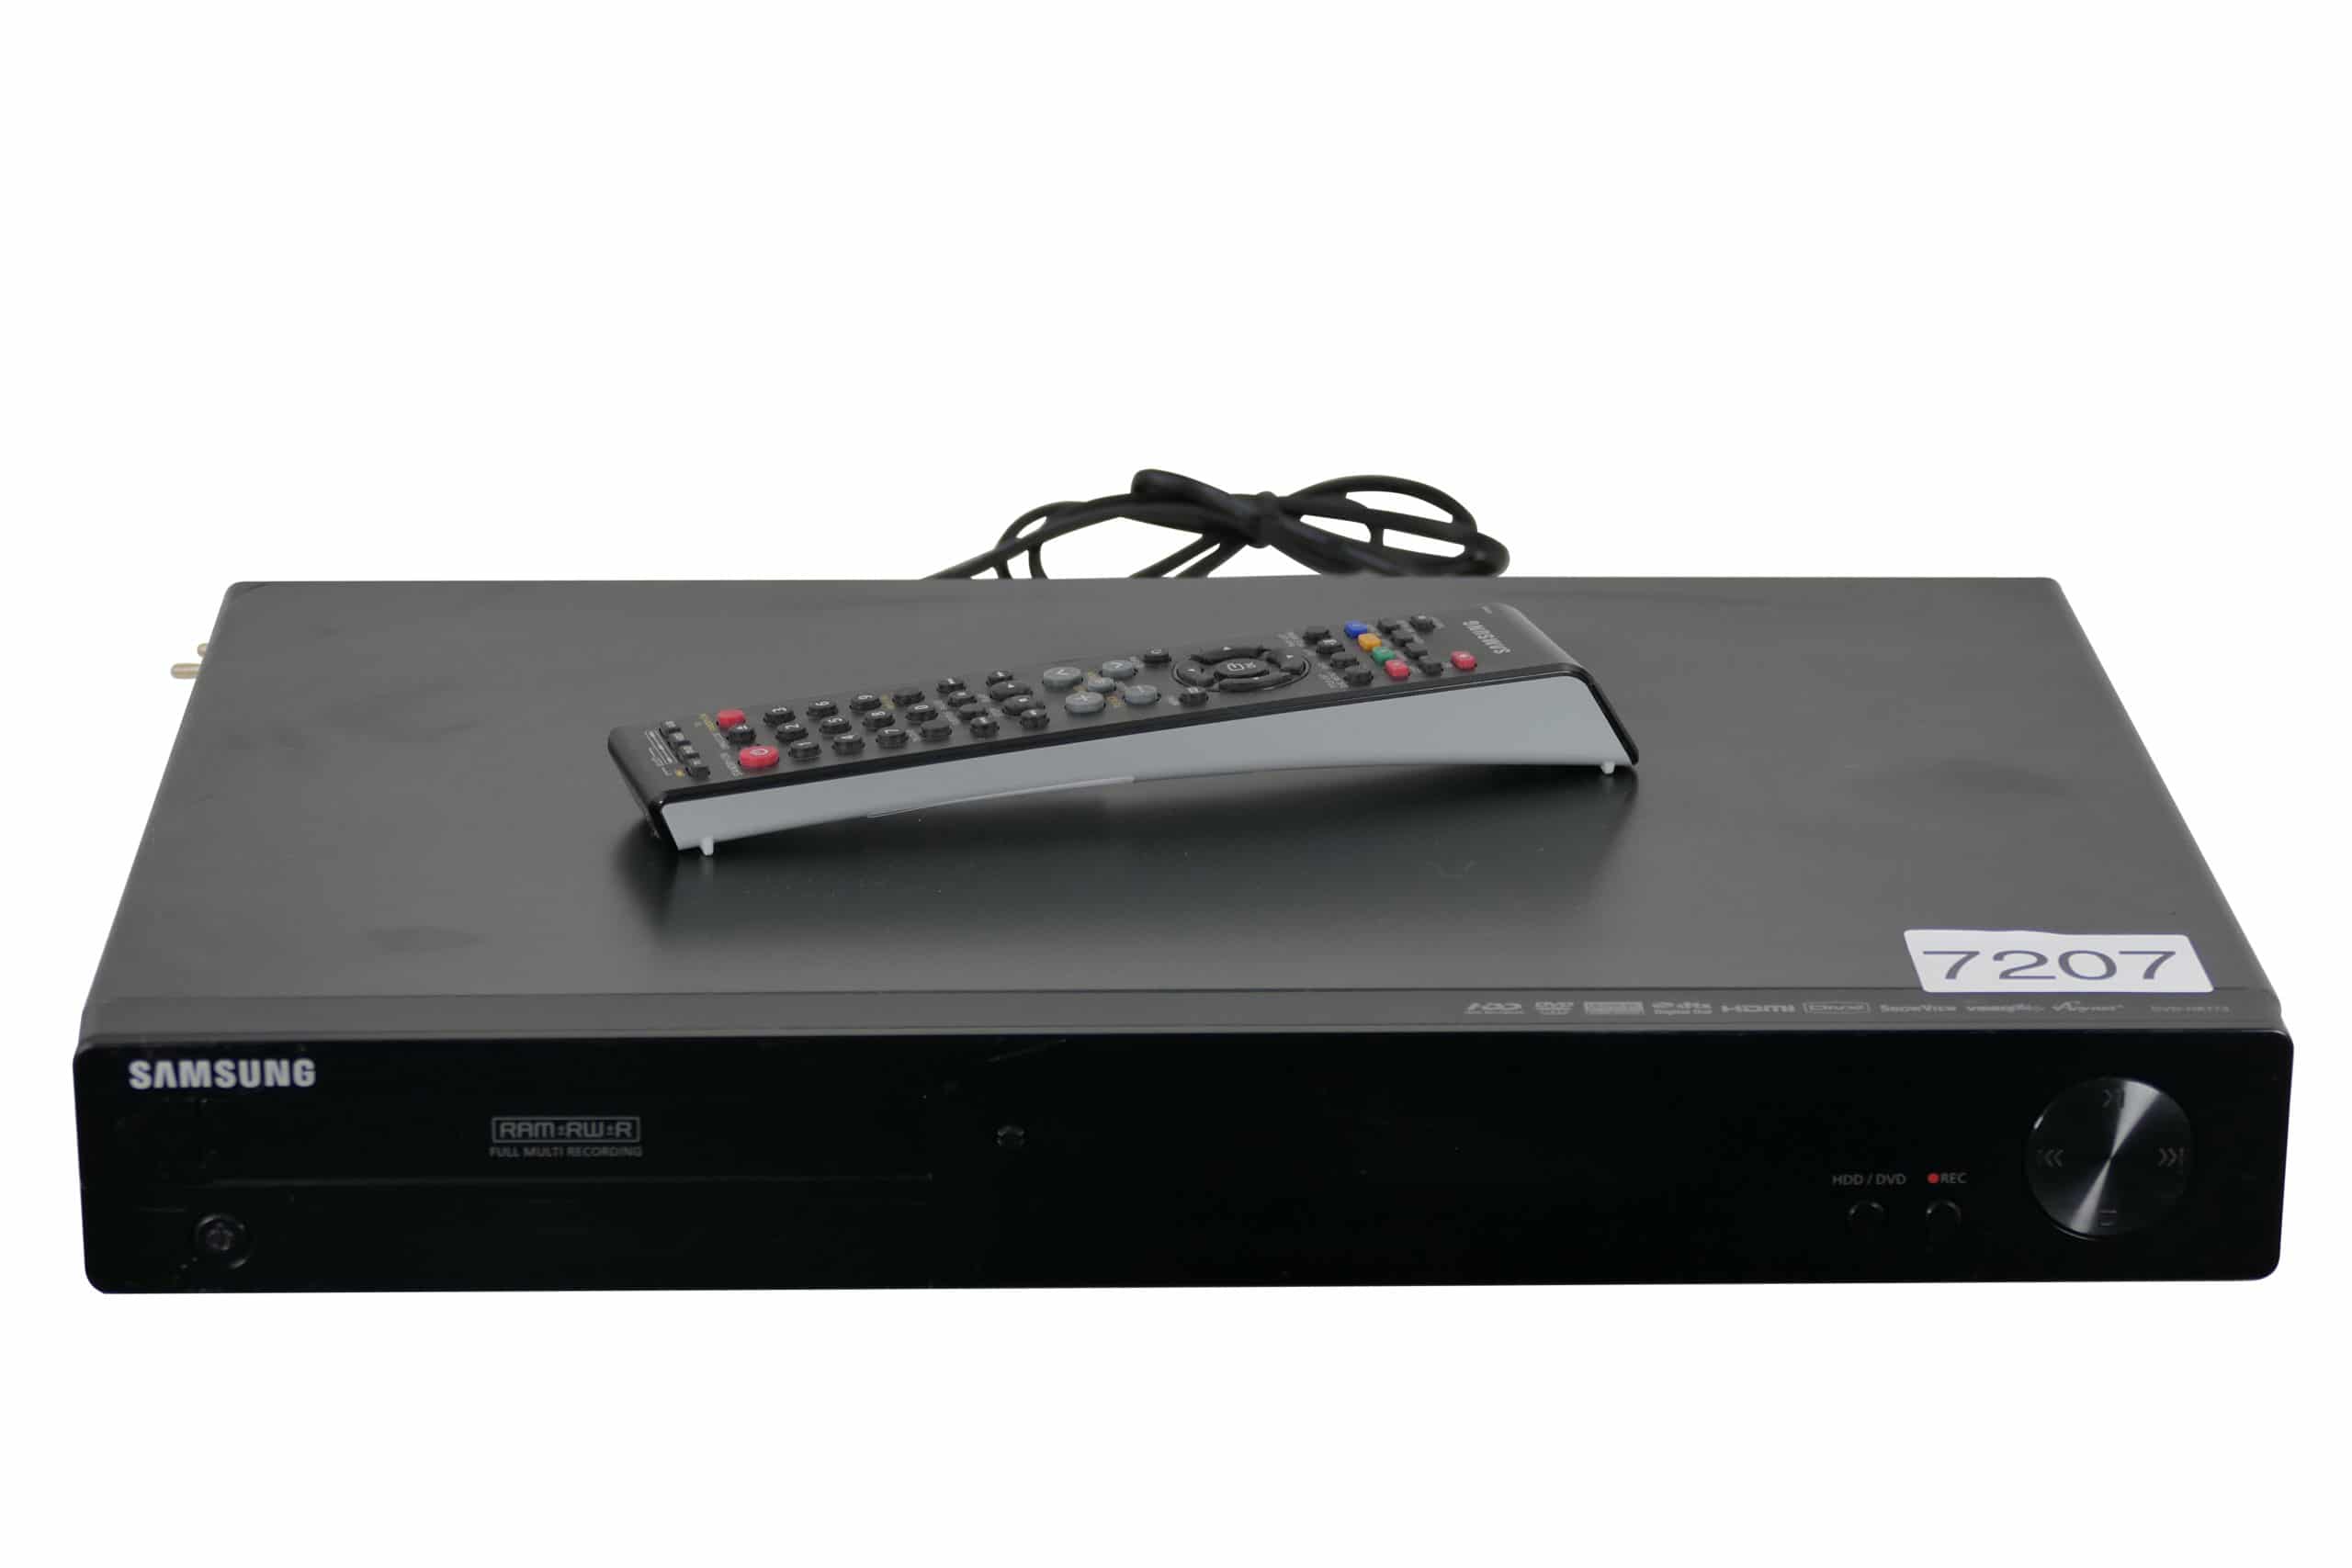 Woordenlijst vragenlijst communicatie Samsung DVD-HR773 - DVD & Harddisk recorder (160GB) | VCRShop